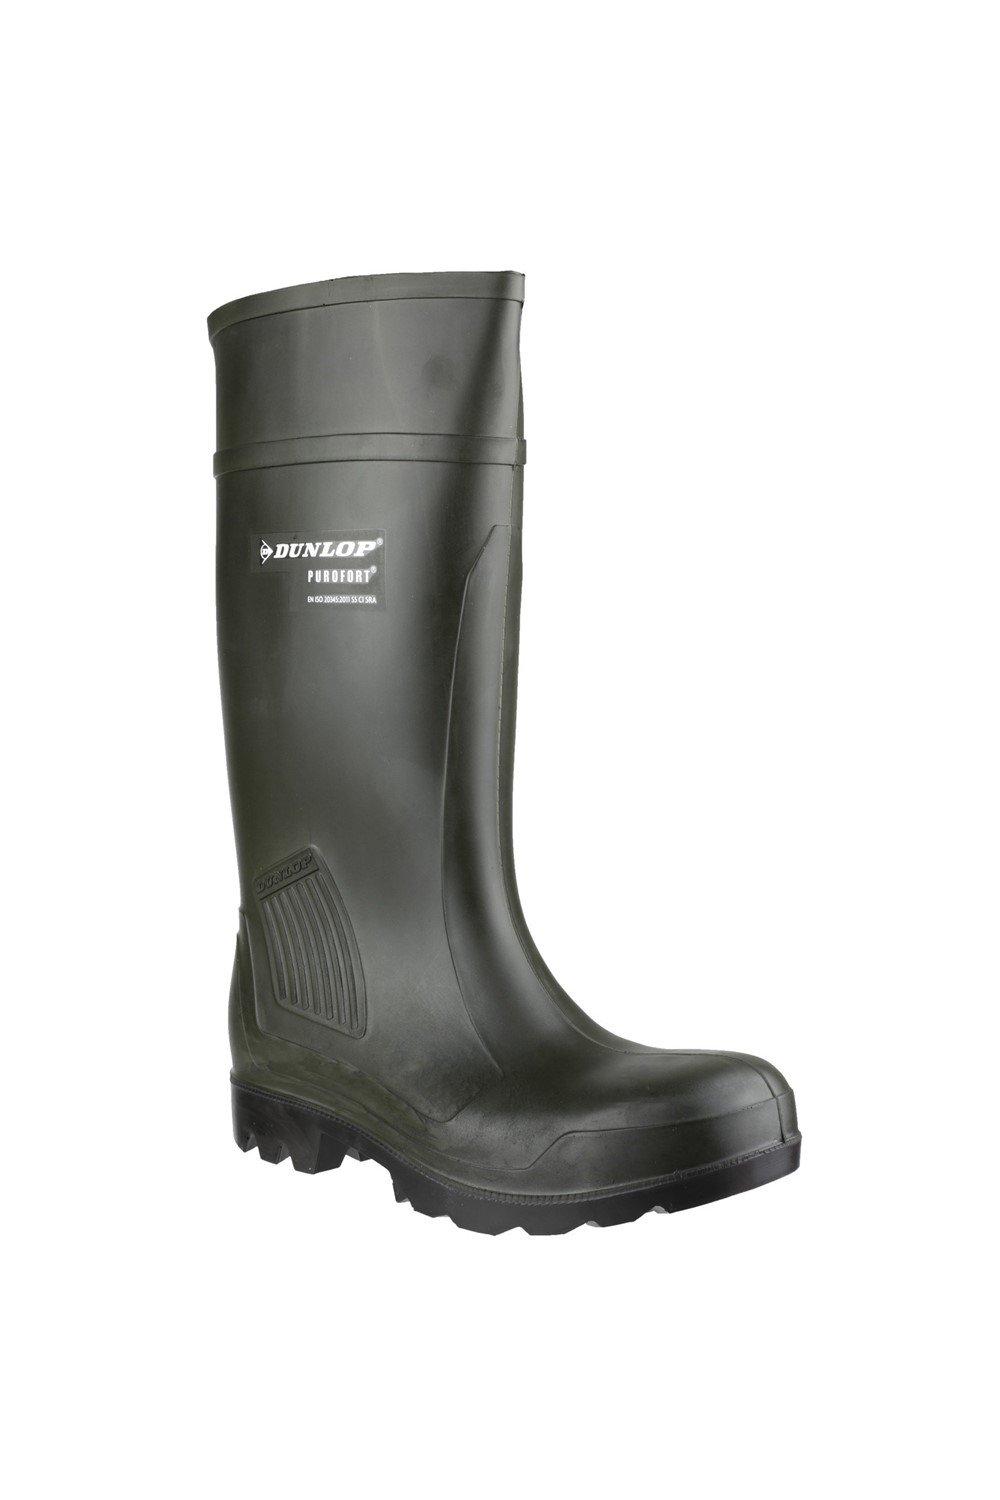 'Purofort Professional' Safety Wellington Boots